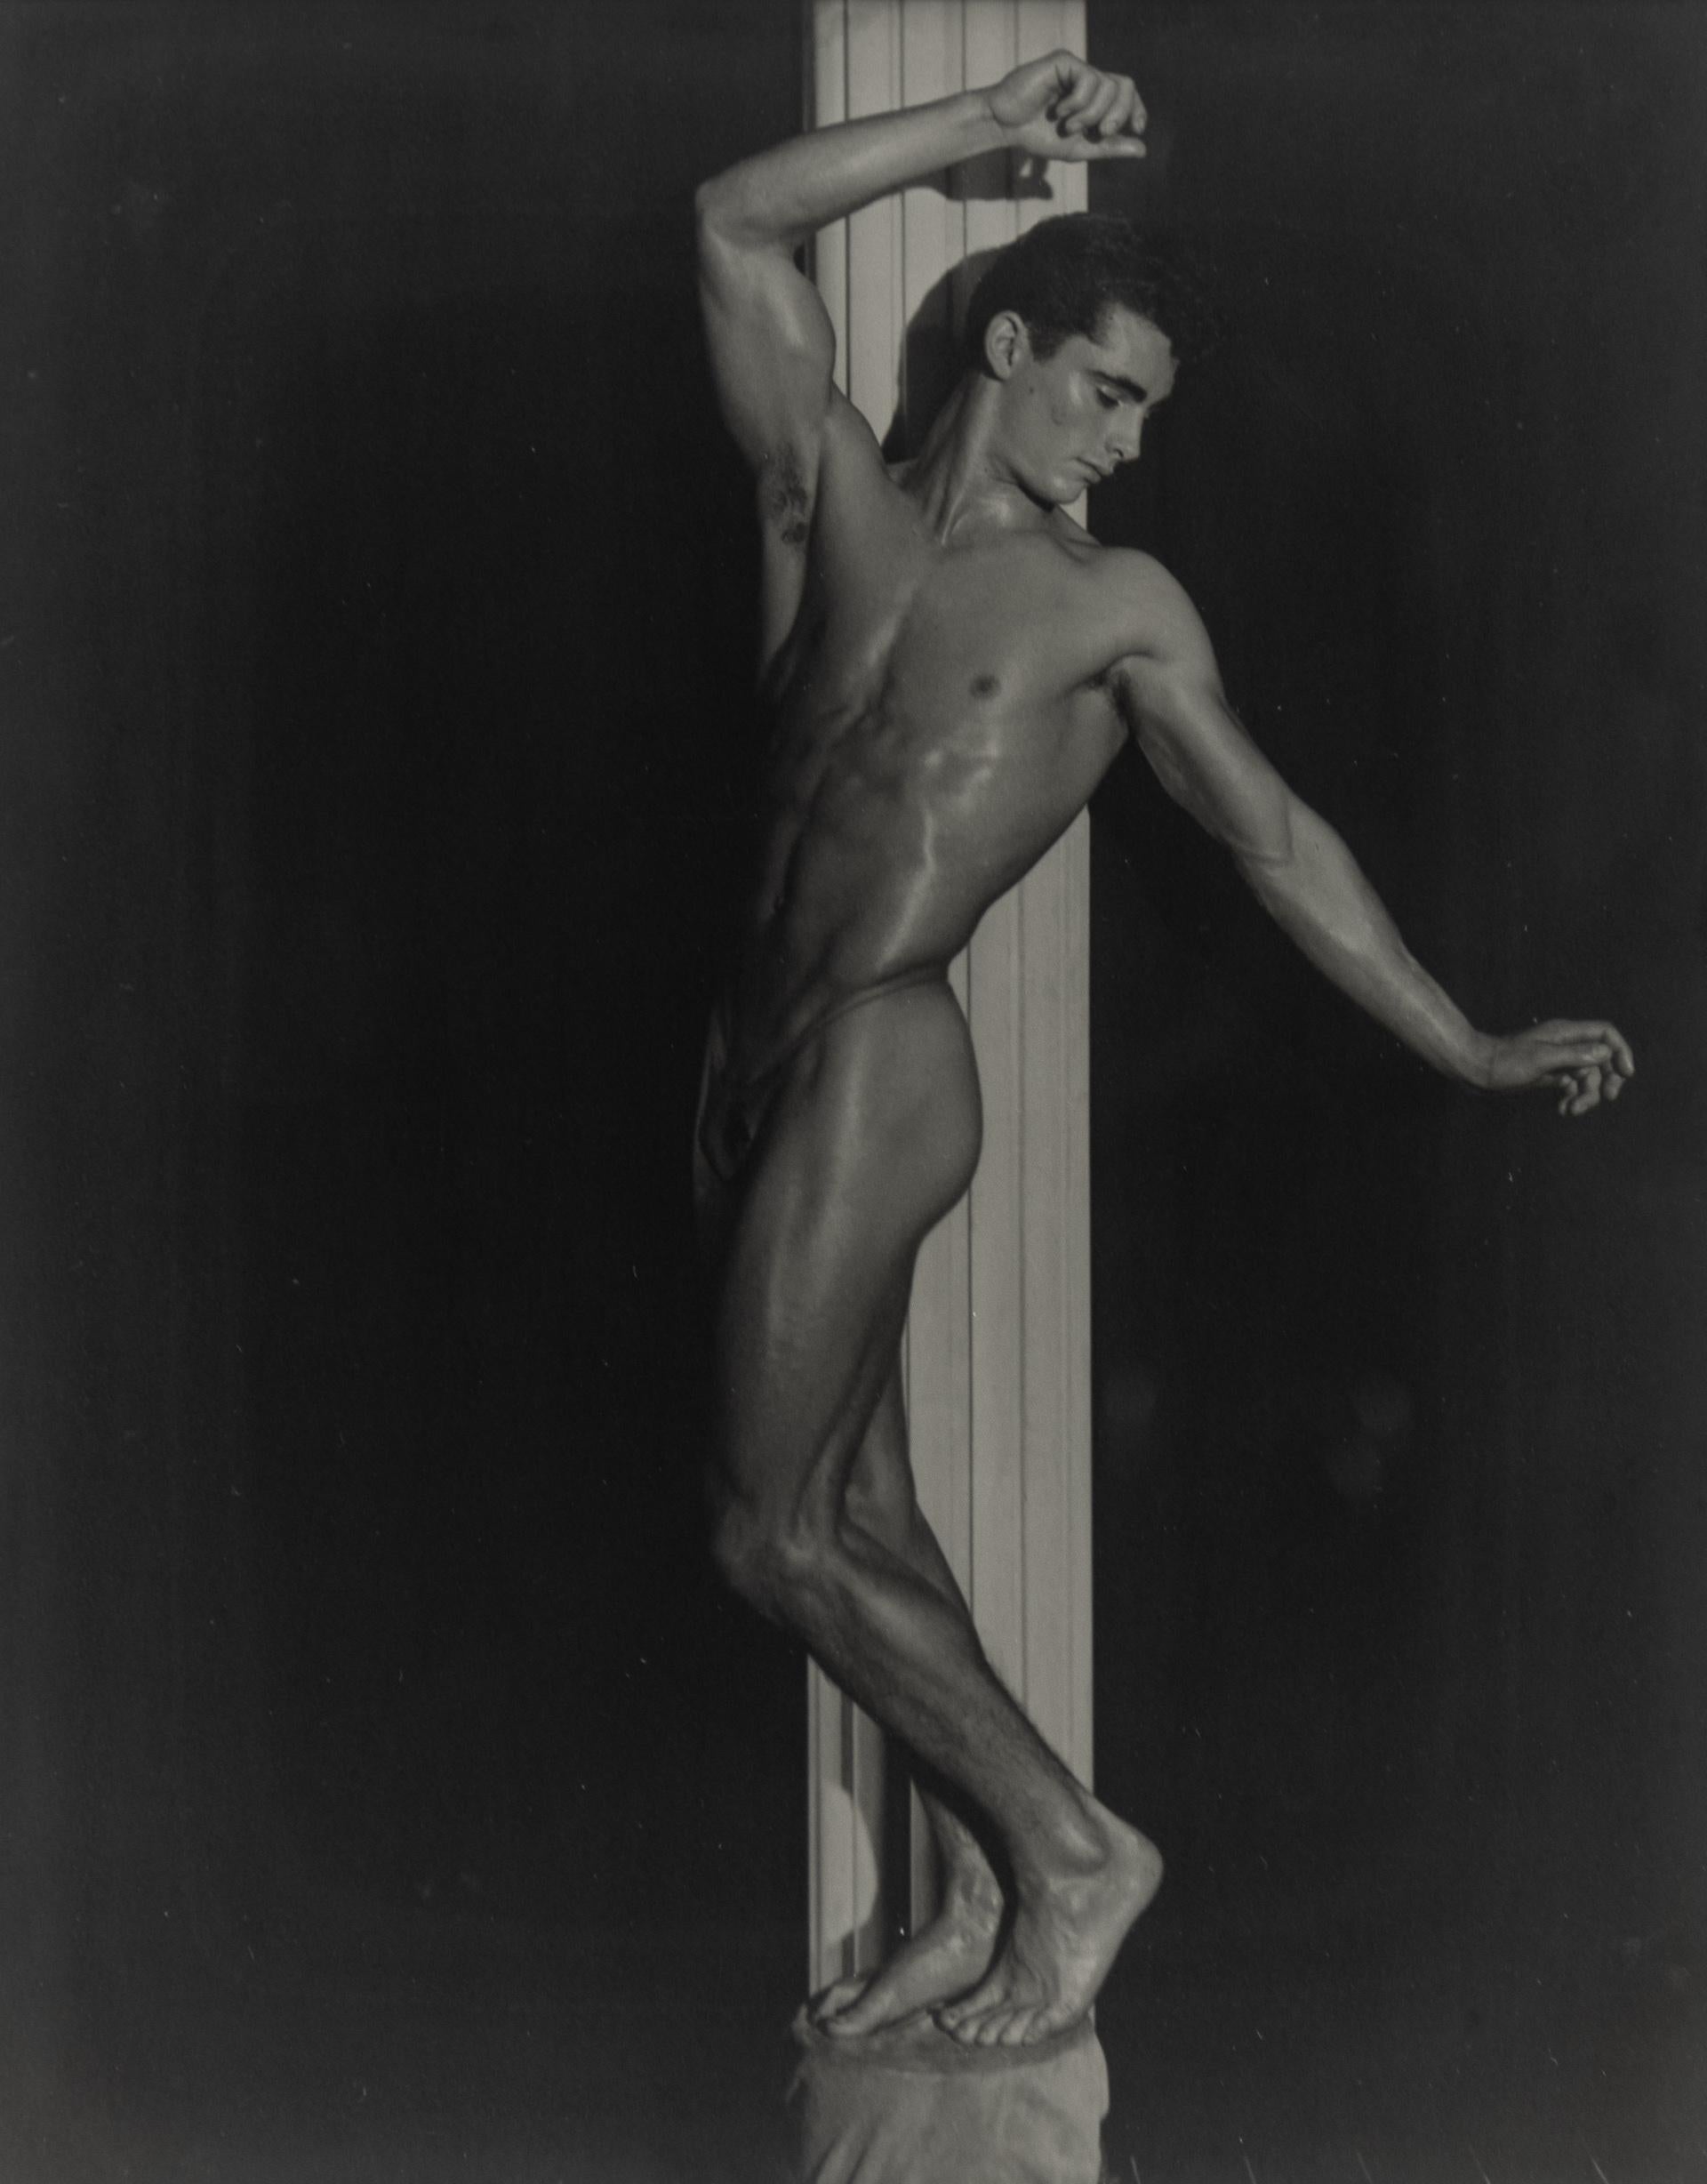 Bob Mizer Nude Photograph - Forrester Millard, Age 21